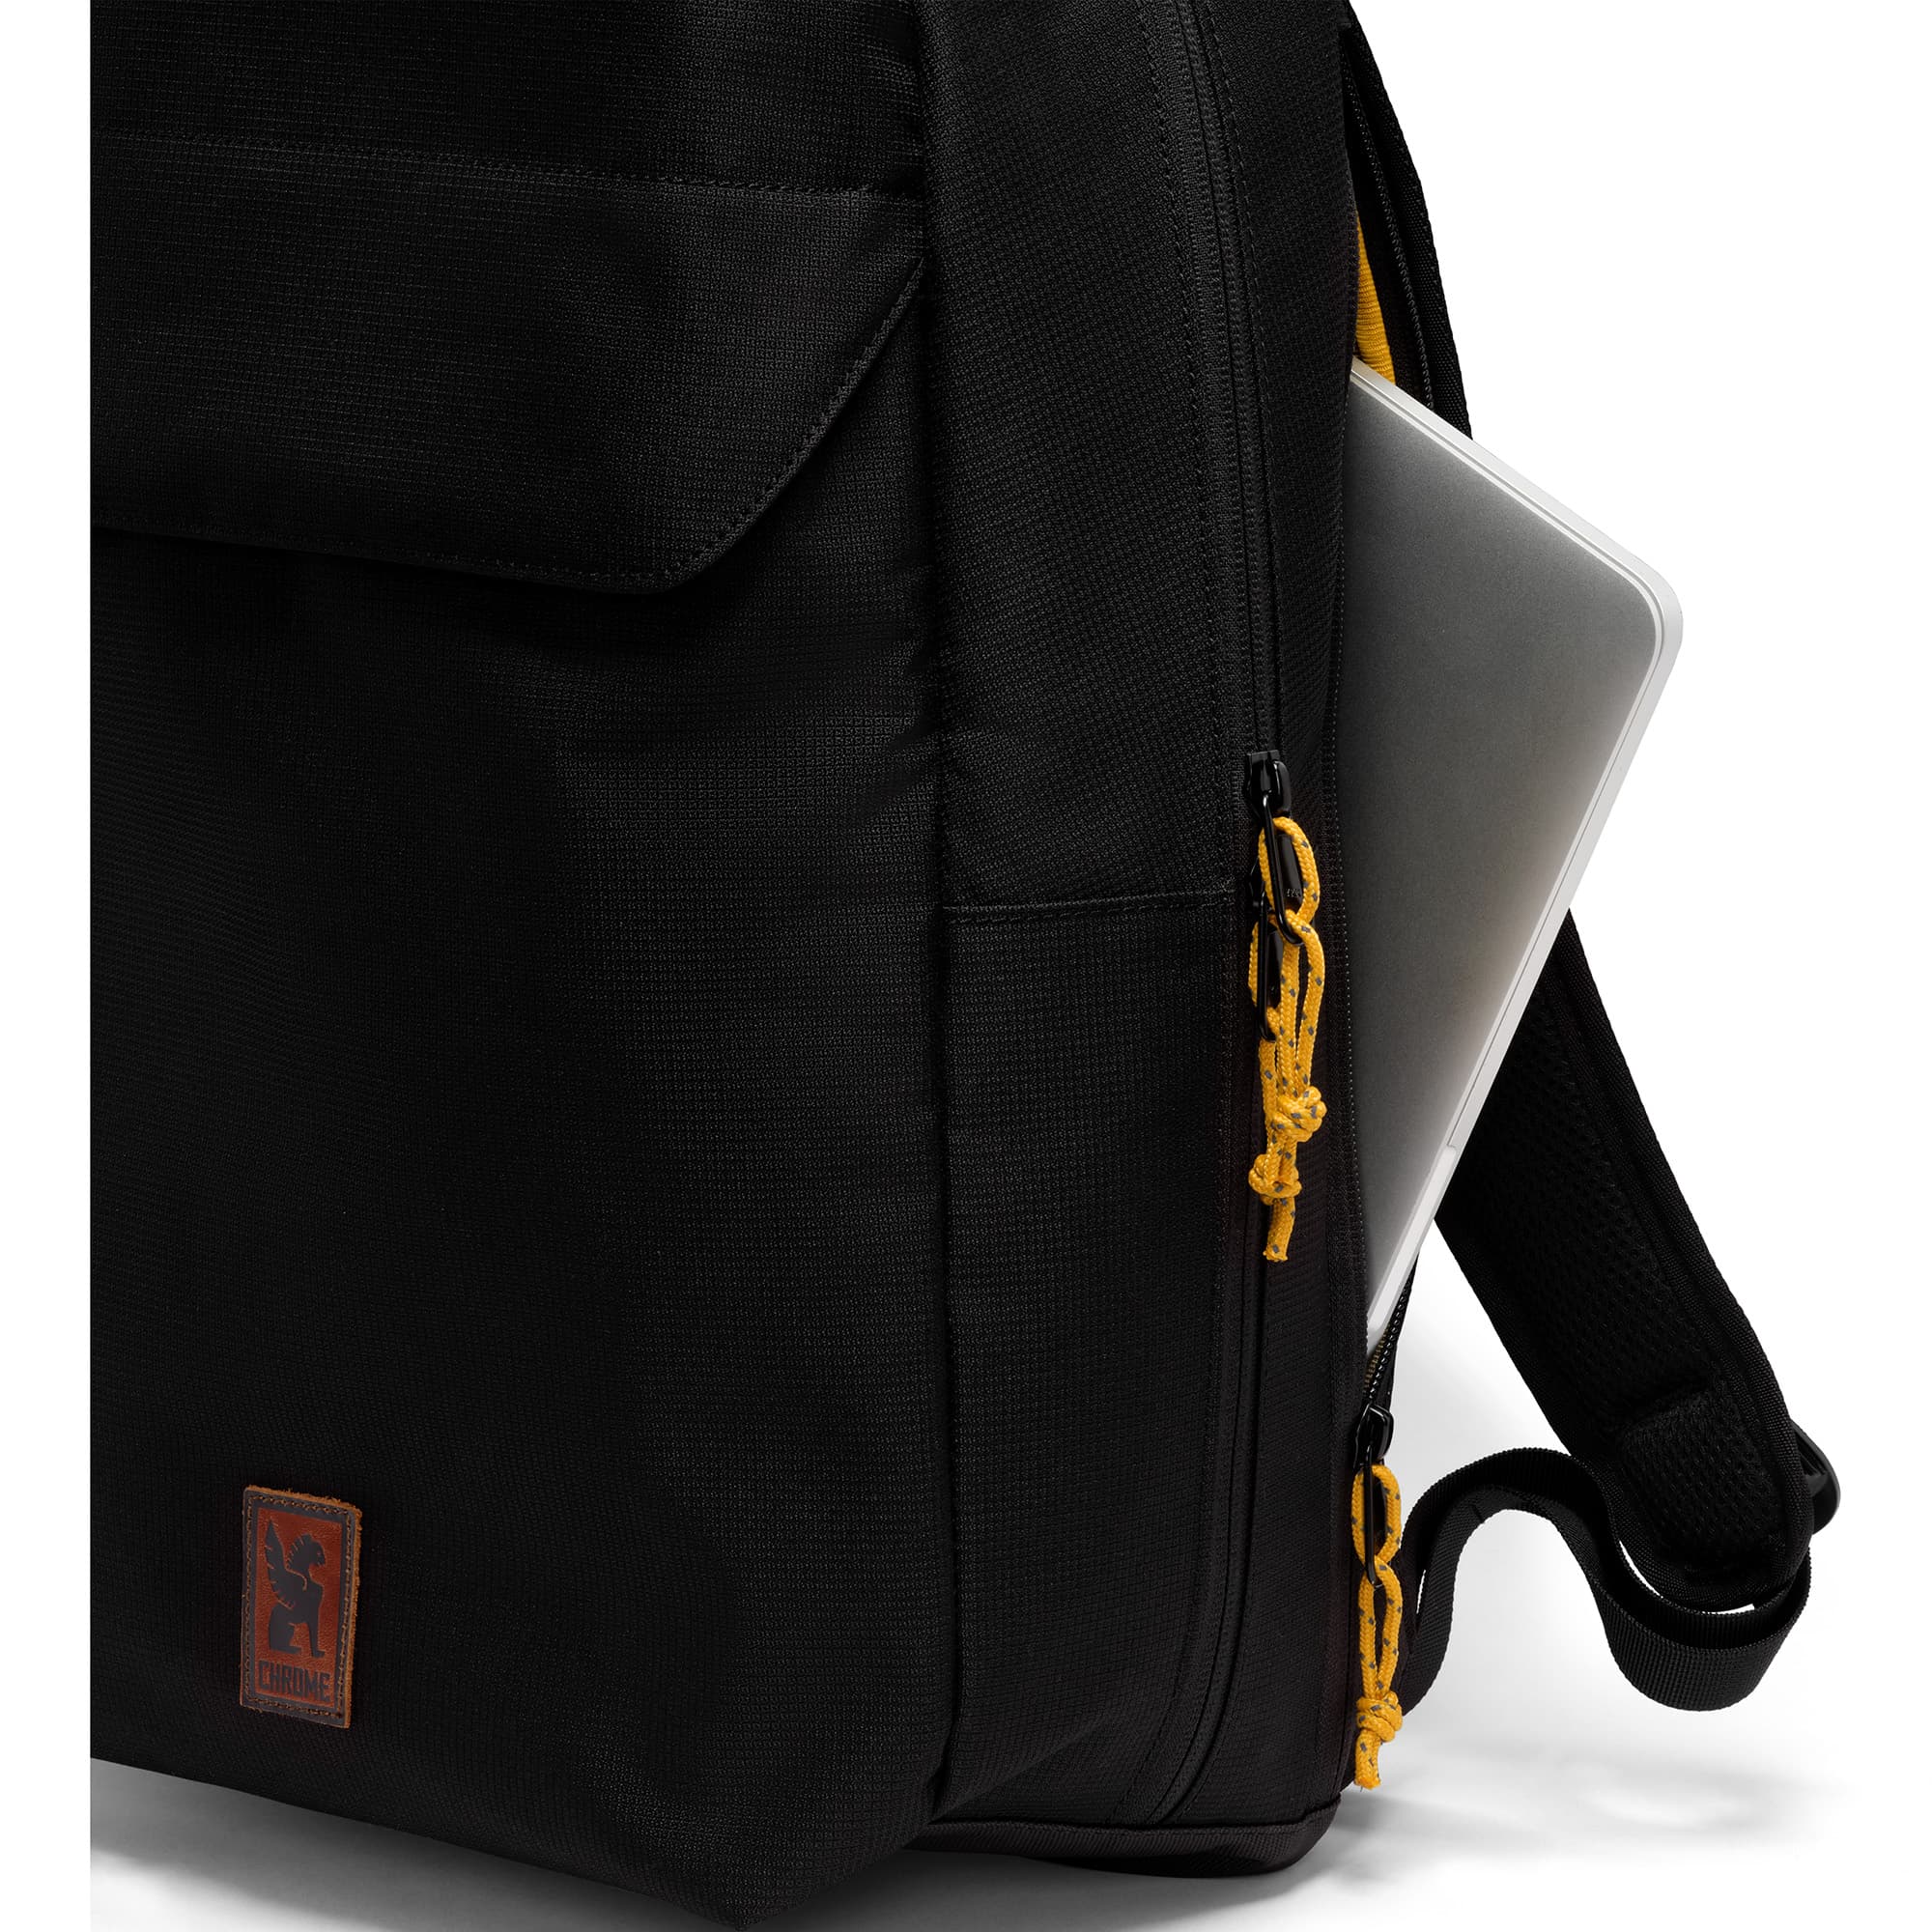 Ruckas 23L Backpack in black side zip computer pocket